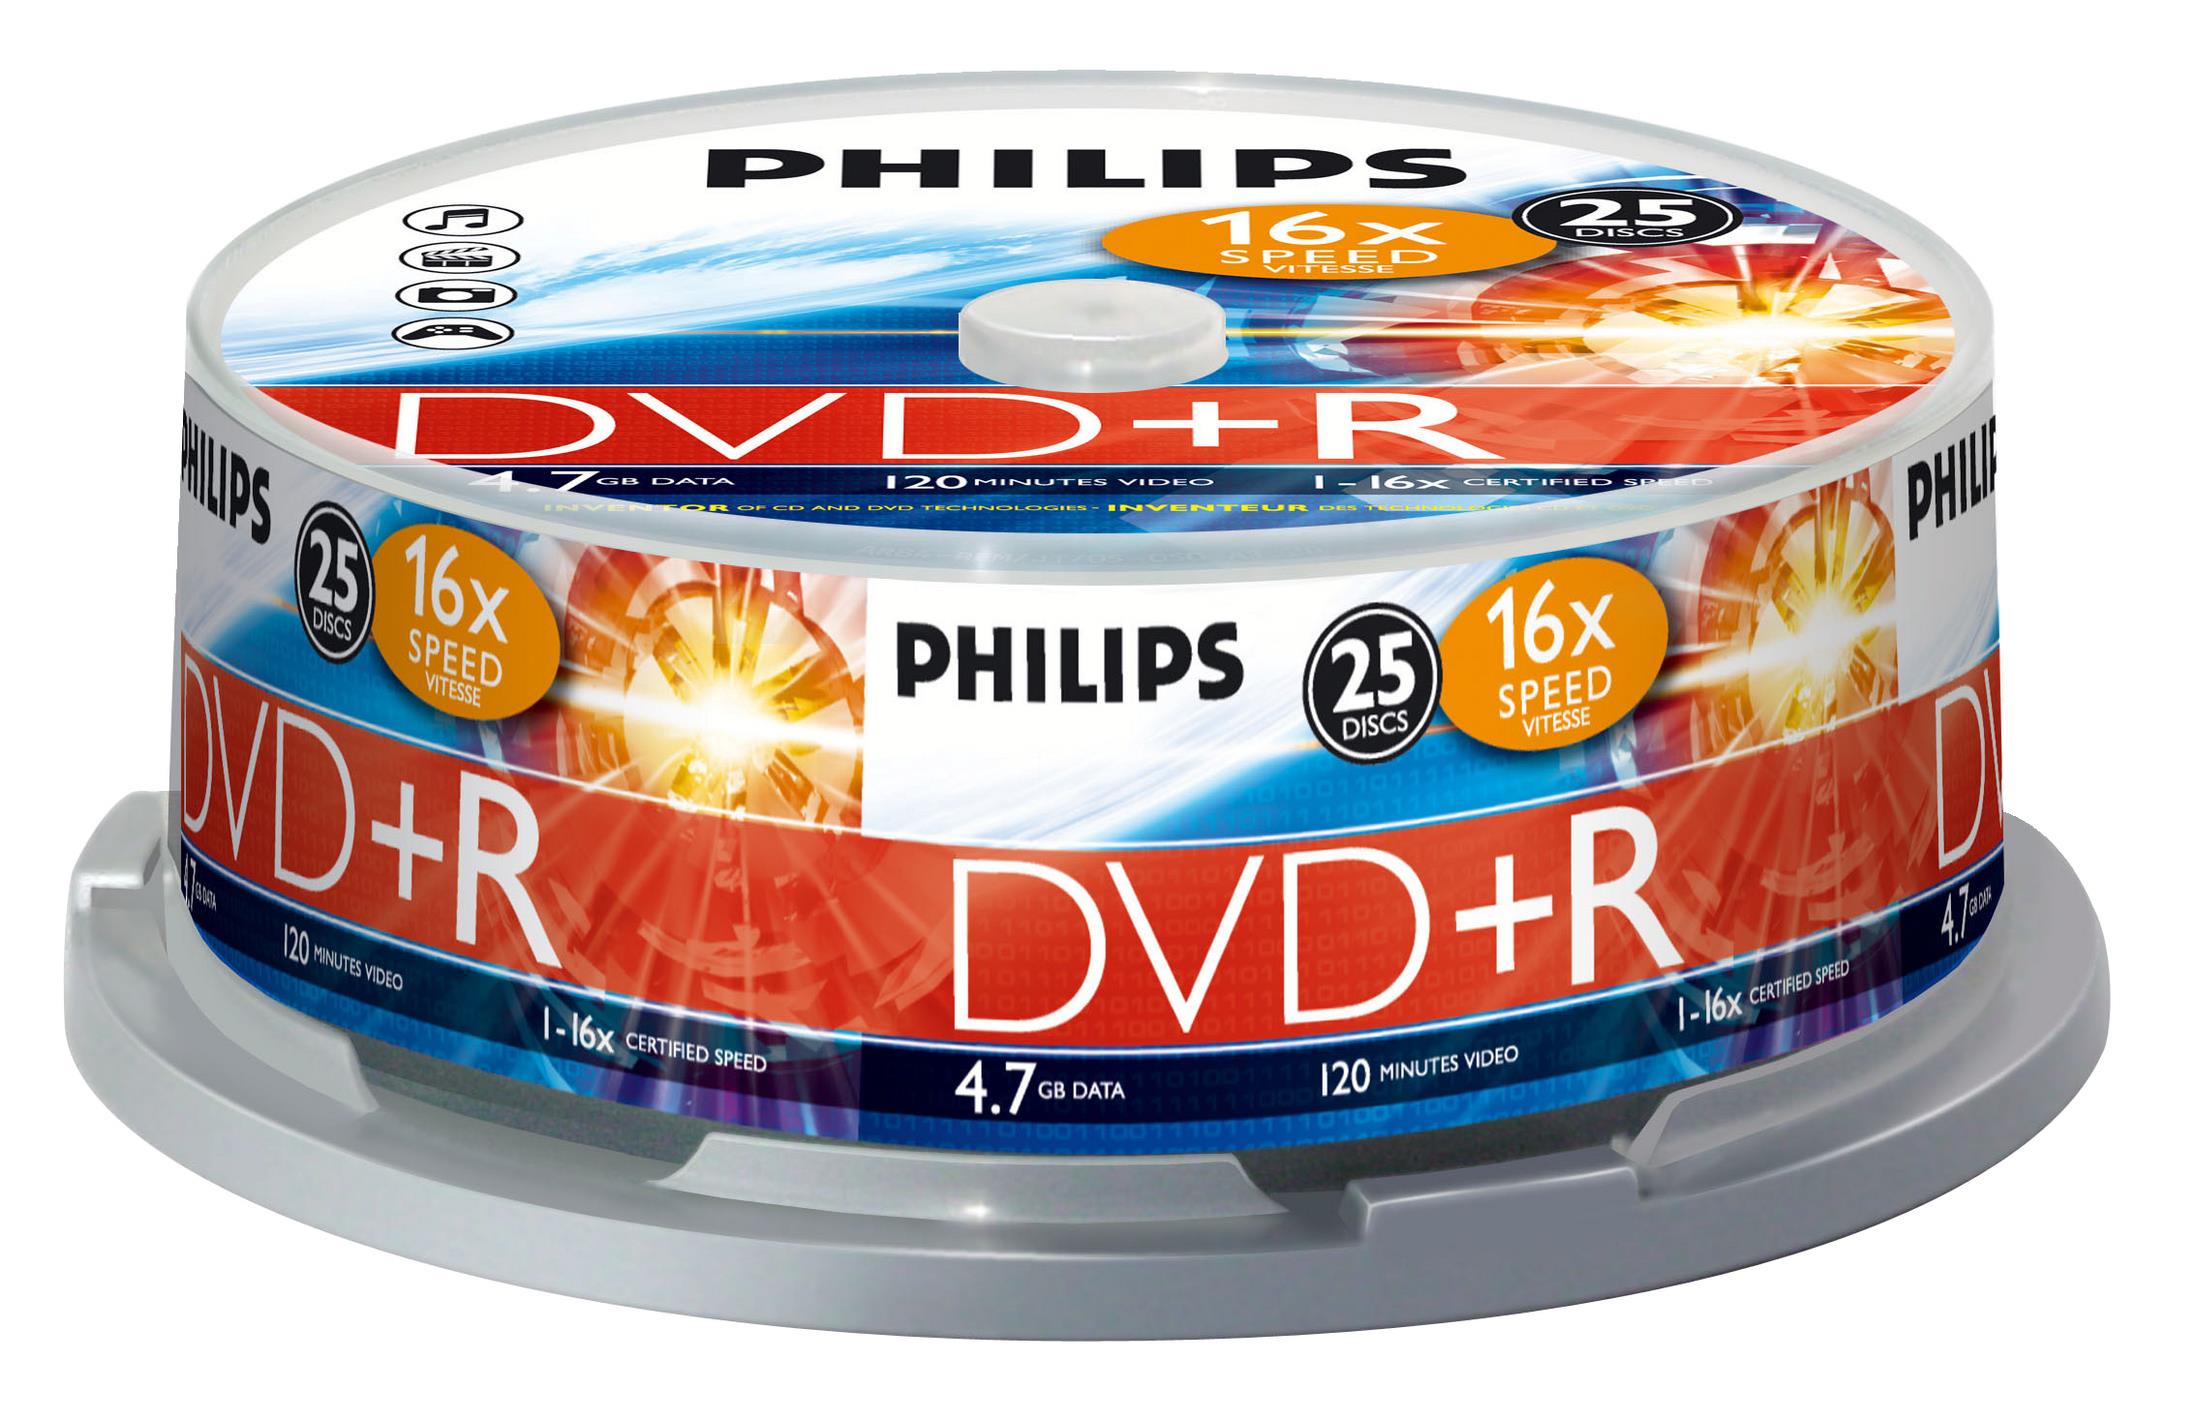 Philips Dvd+r 16x 120m